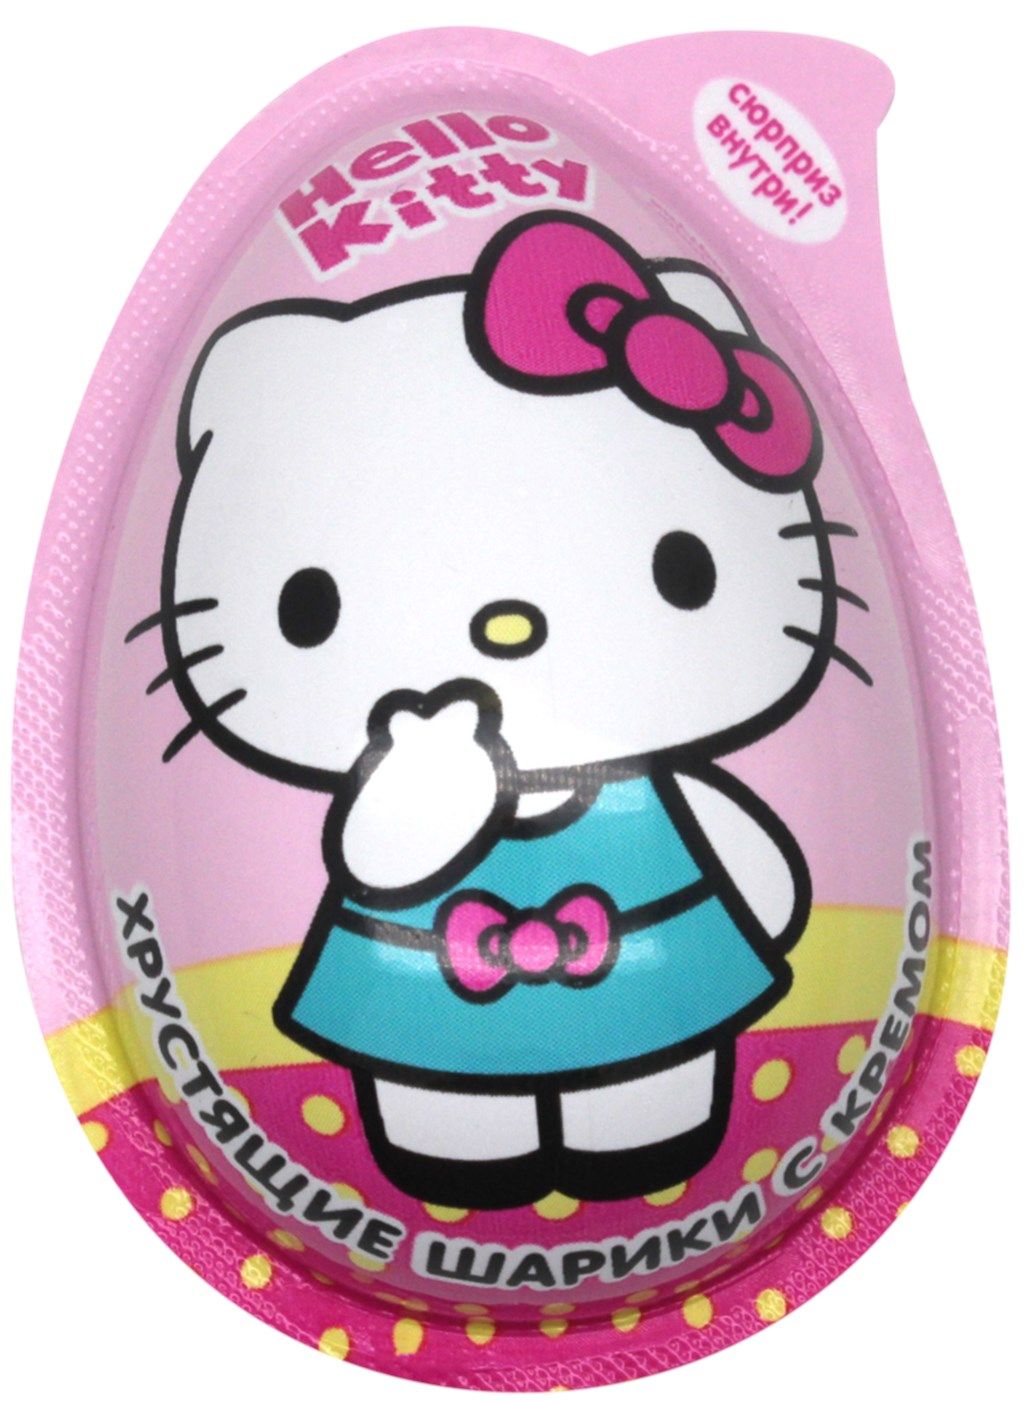 Яйца хеллоу. Яйцо Хеллоу Китти с игрушкой 20 г. Шоколадное яйцо hello Kitty. Hello Kitty хрустящие шарики. Яичко Хелло Китти с хрустящими шариками.